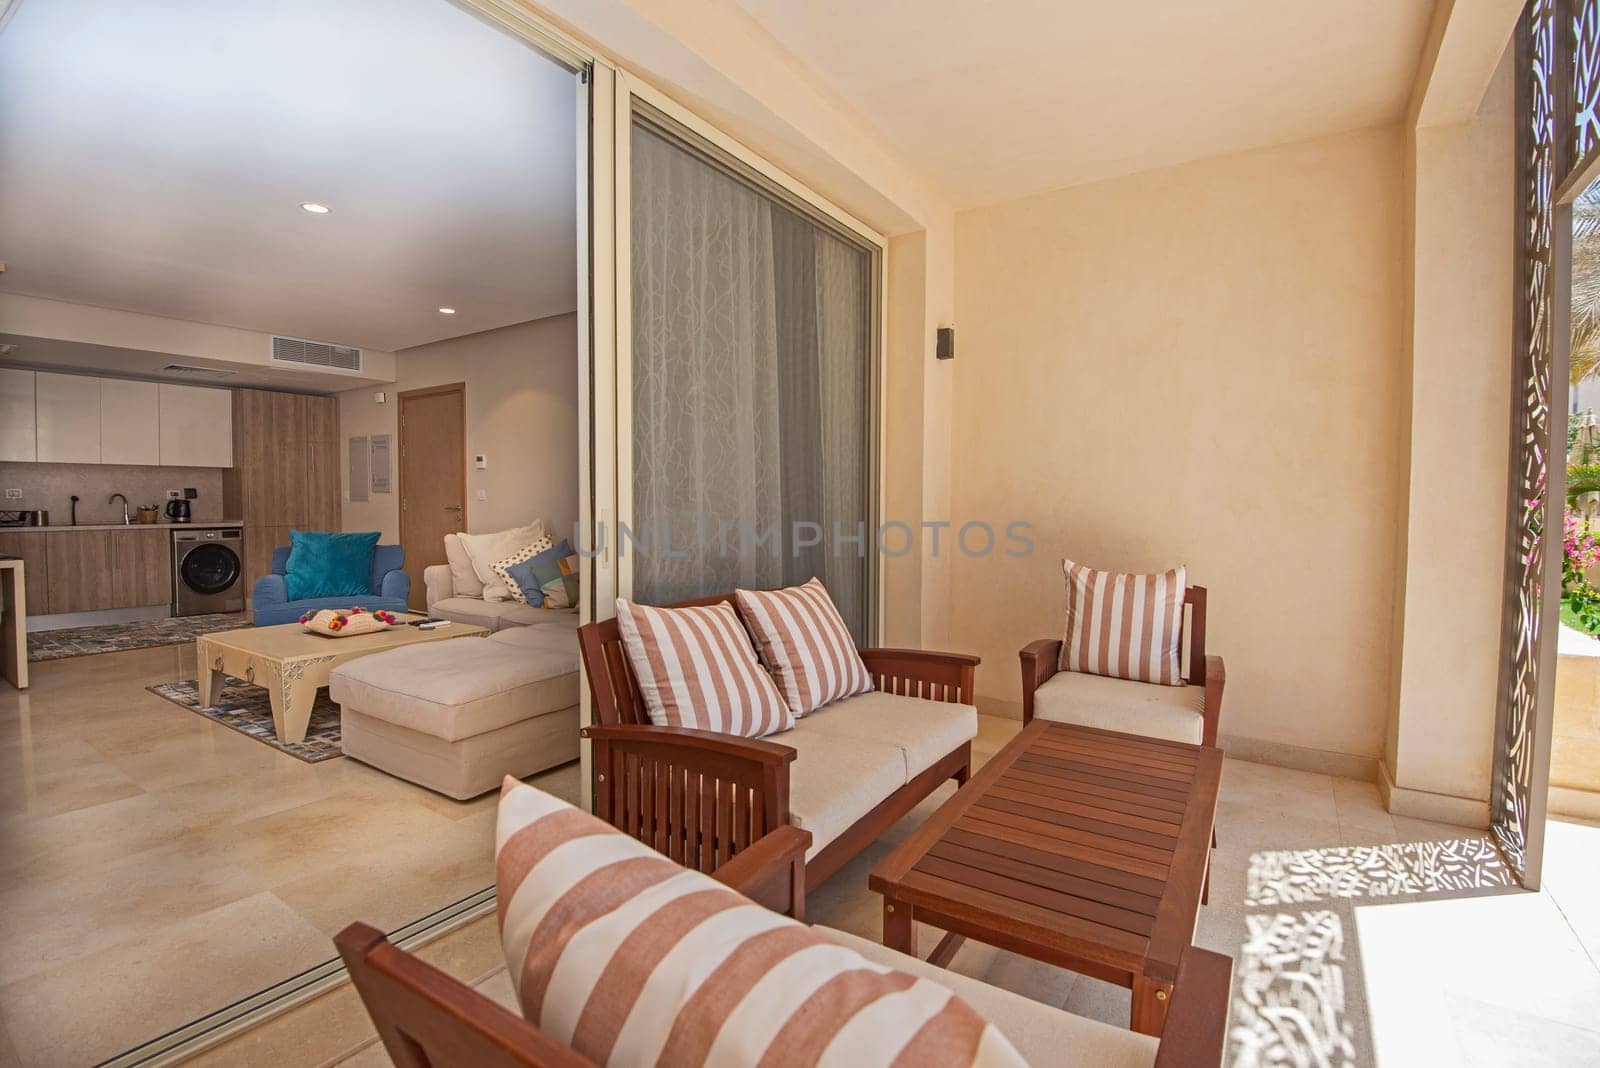 Interior design of luxury apartment living room with patio by paulvinten